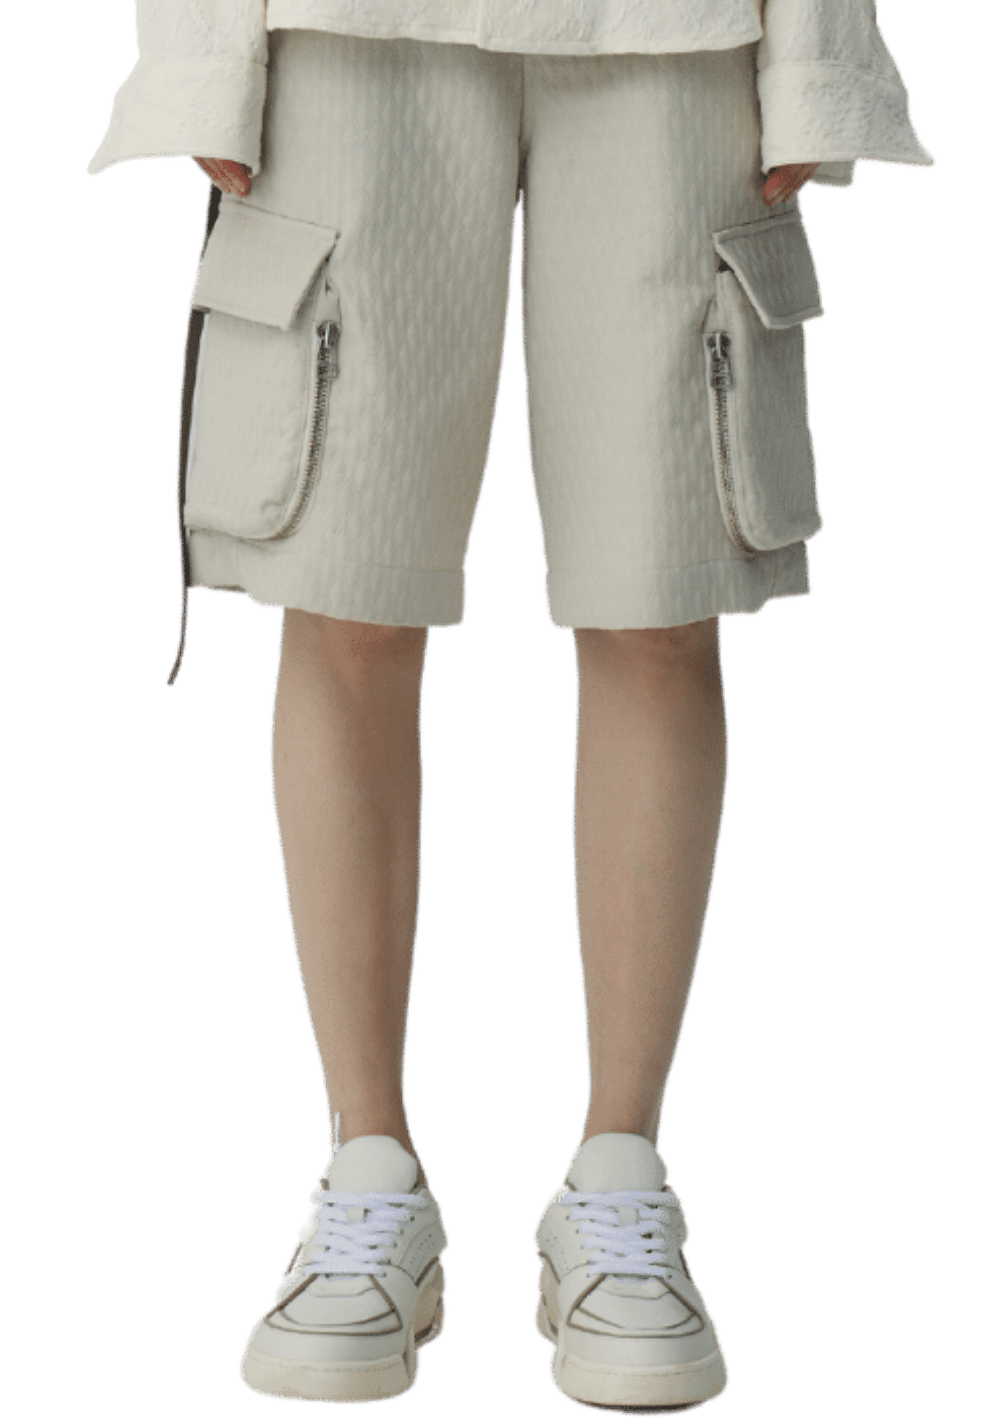 Belted Lozenge Shorts - PSYLOS 1, Belted Lozenge Shorts, Shorts, The Last Redemption, PSYLOS 1